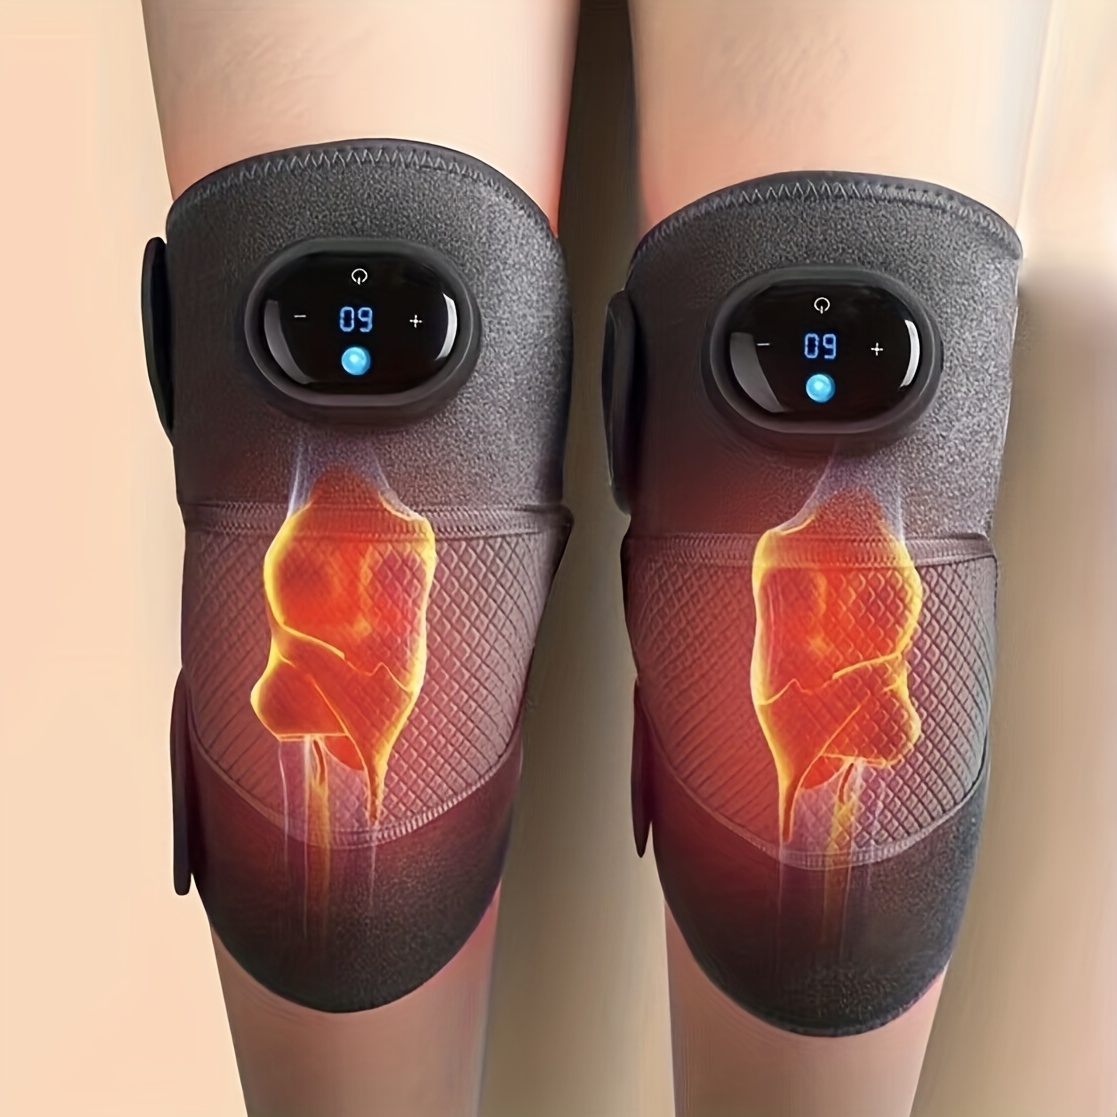 Cordless Knee Brace 3 in 1 Heating Vibration Massage Support Belt